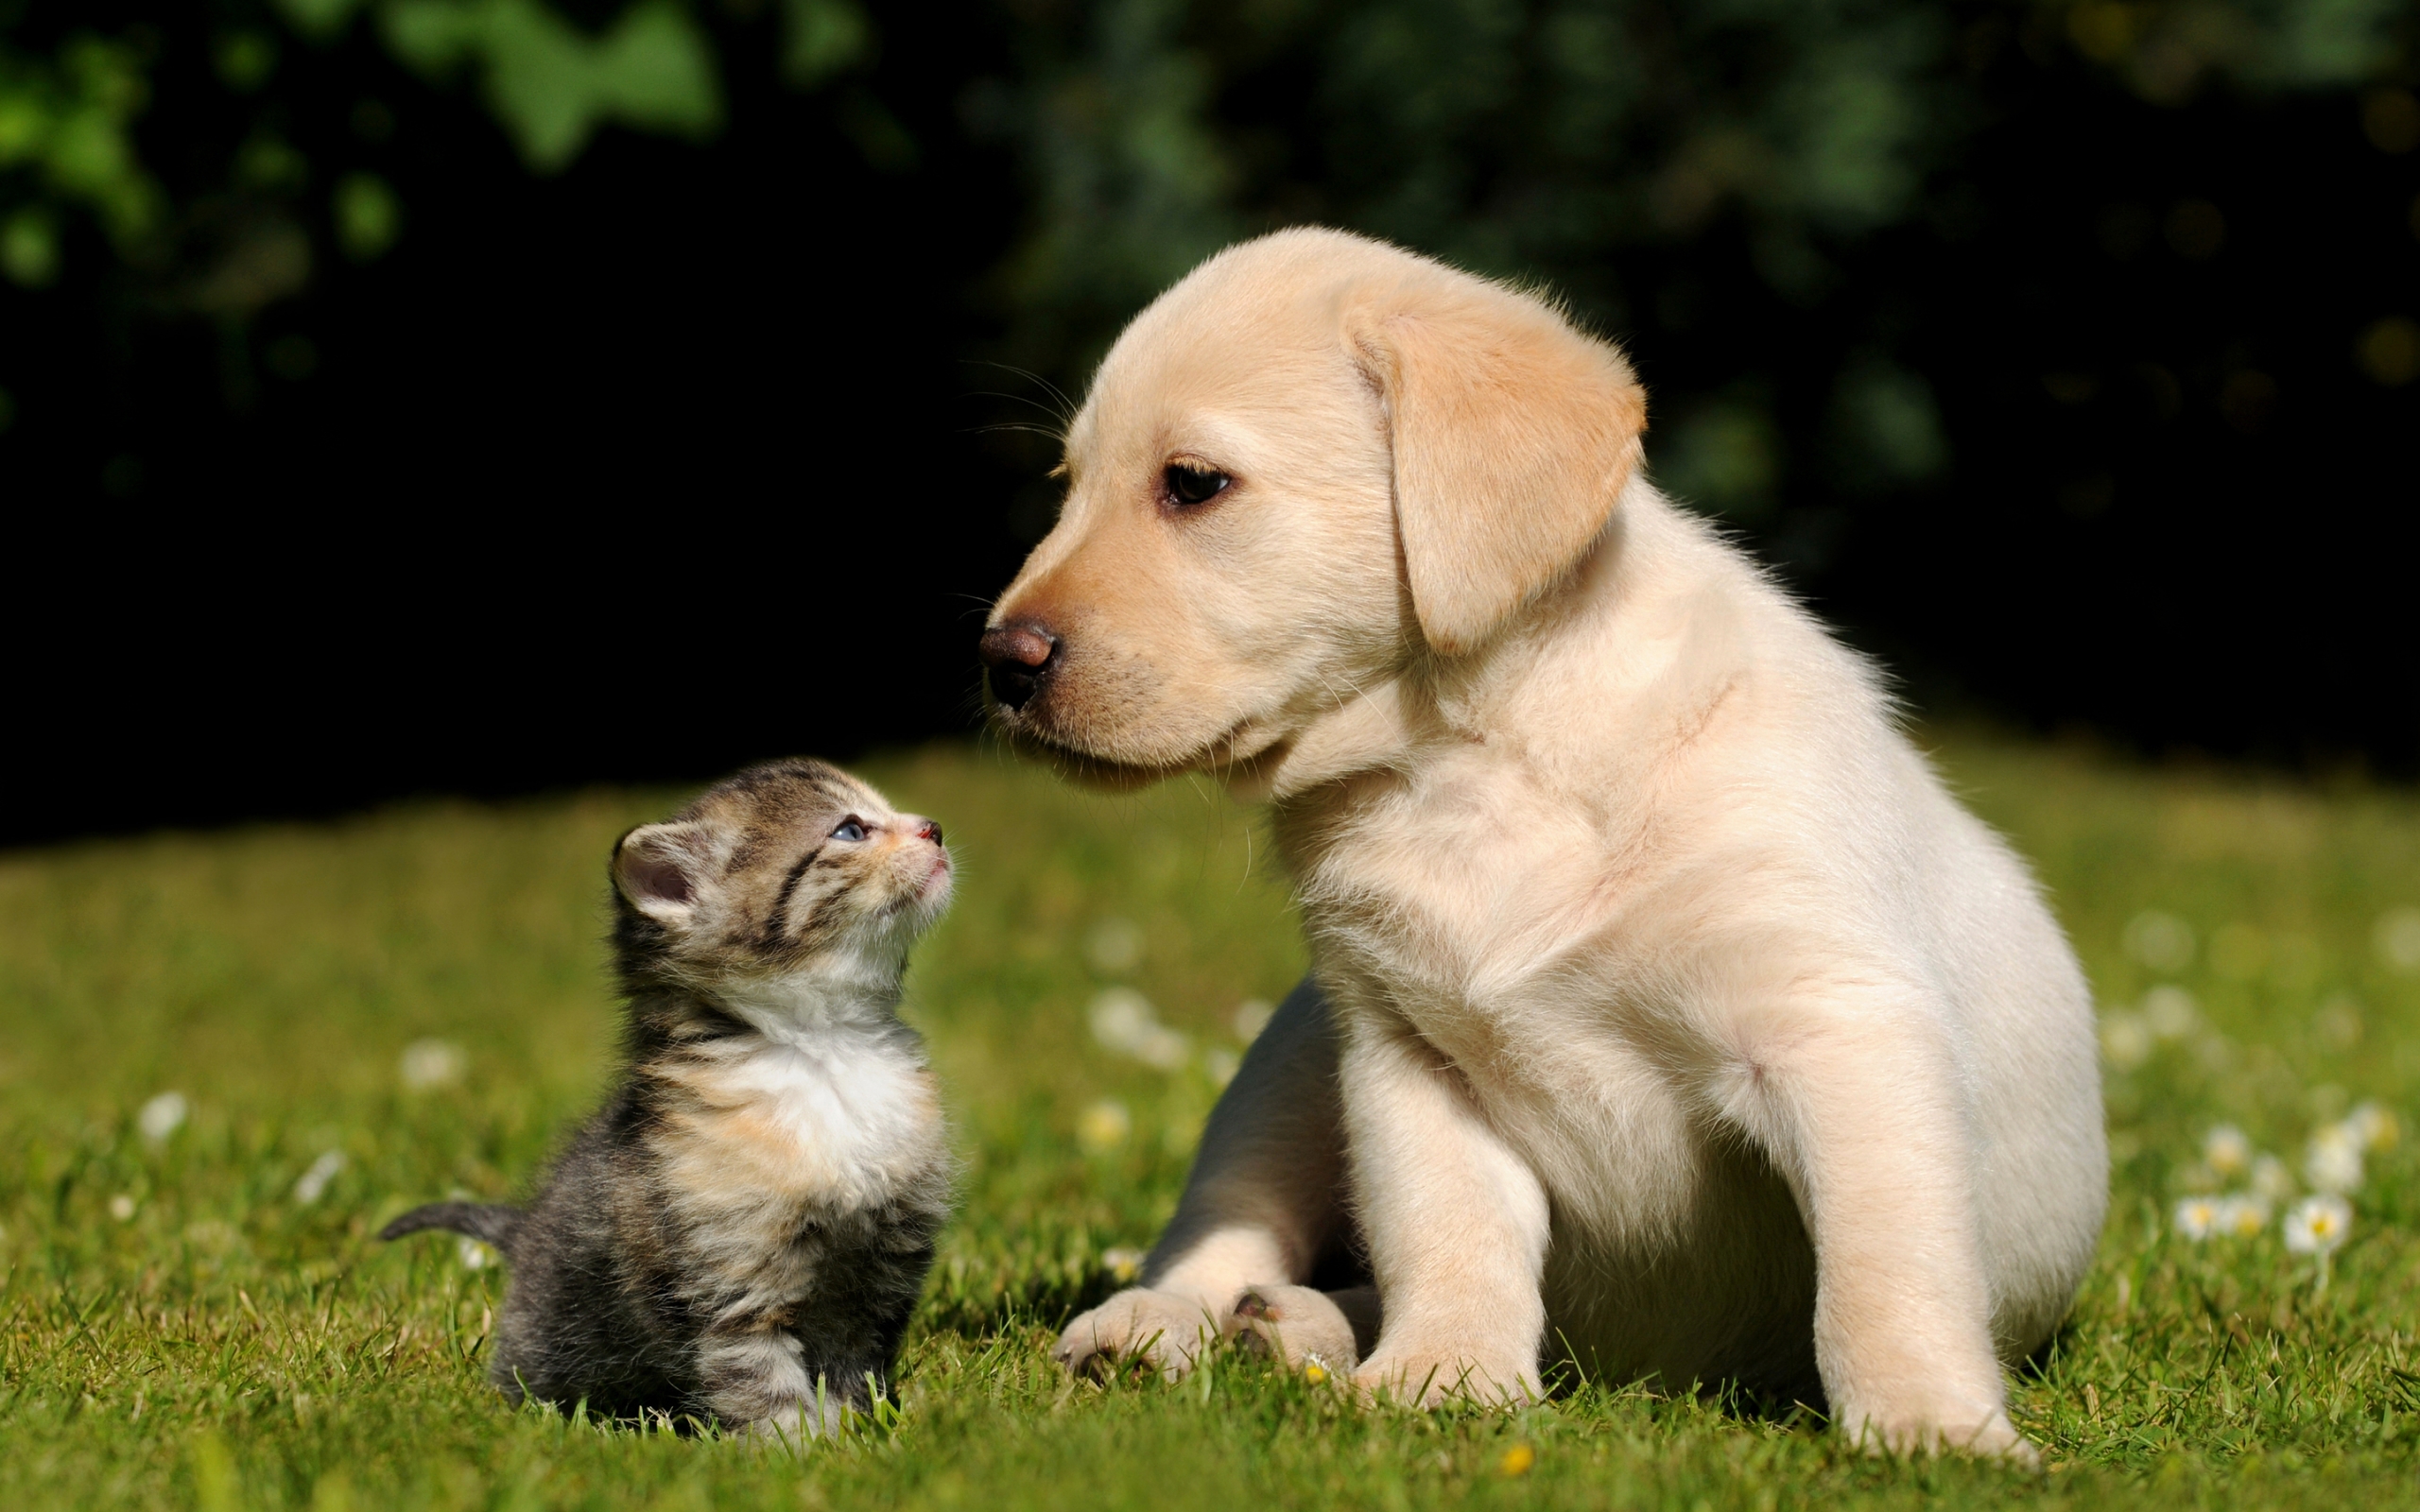 Cat & Dog Picture